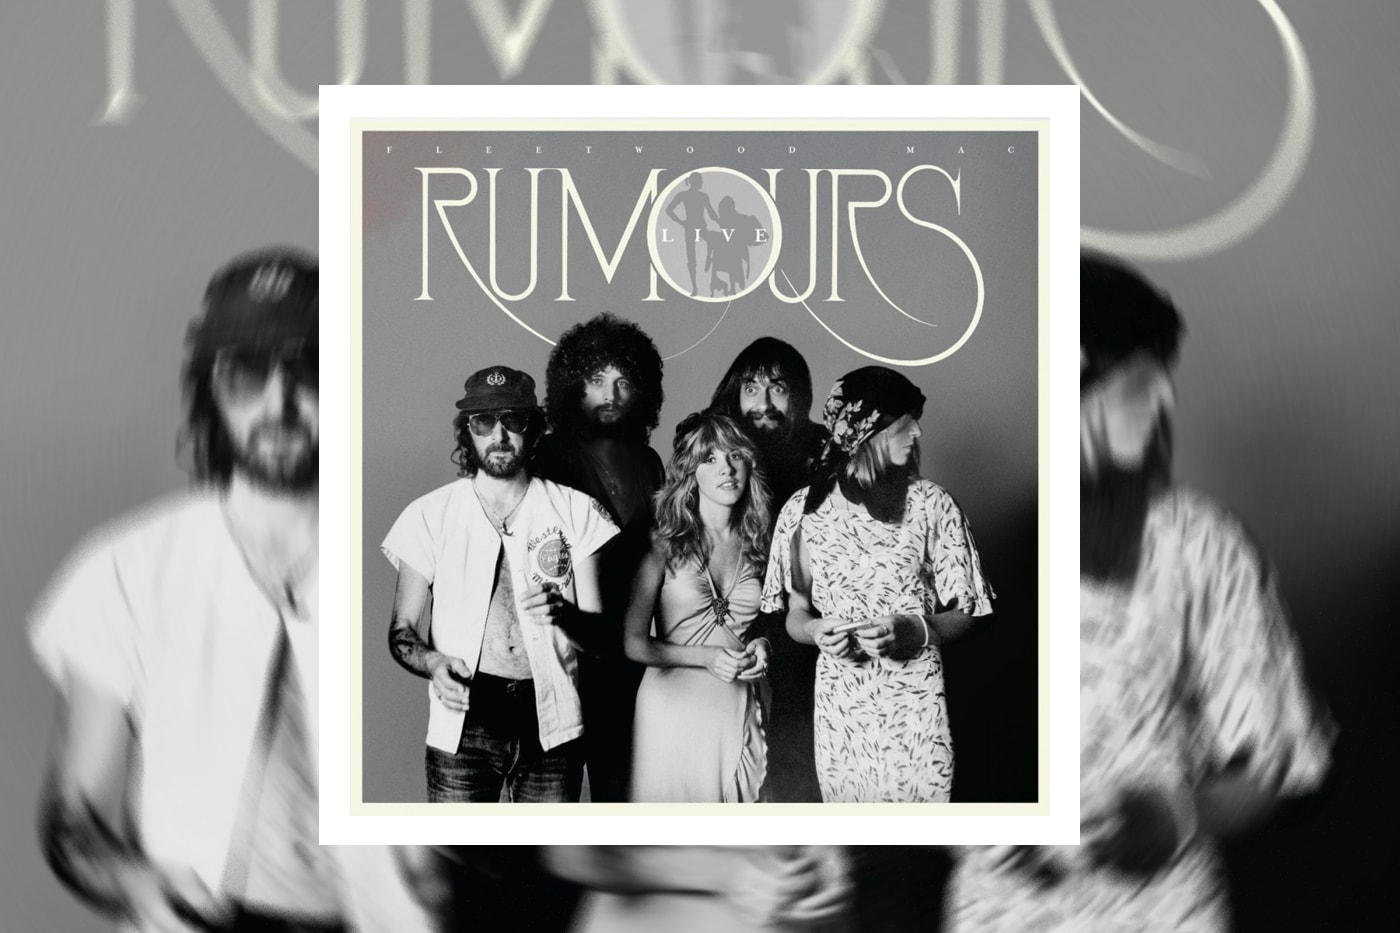 Fleetwood Mac Rumours Live Album Release Info dreams 1977 live single stream